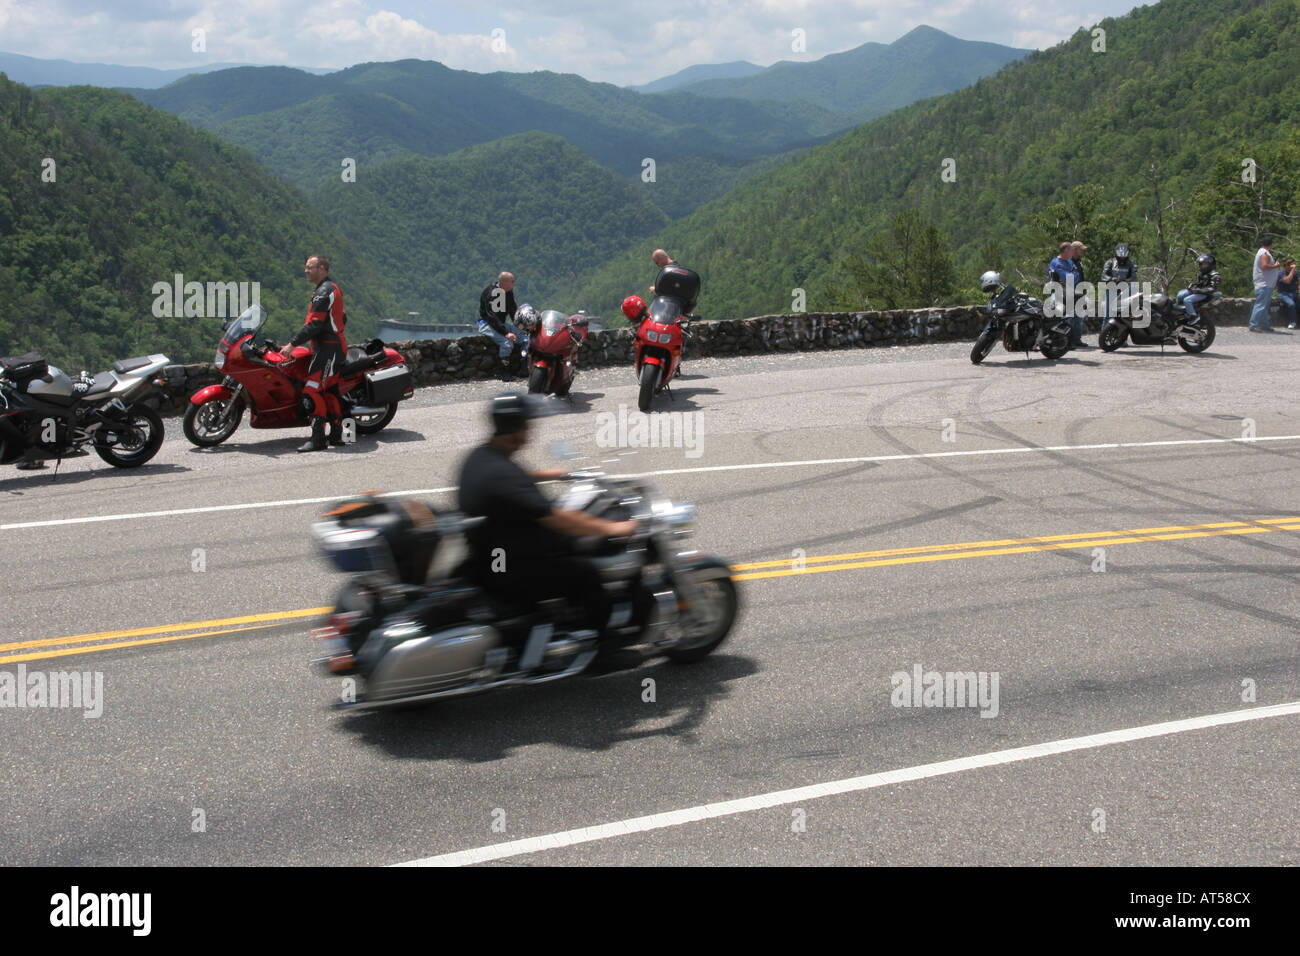 motorcycle riding Deals Gap smoky mountain park Stock Photo